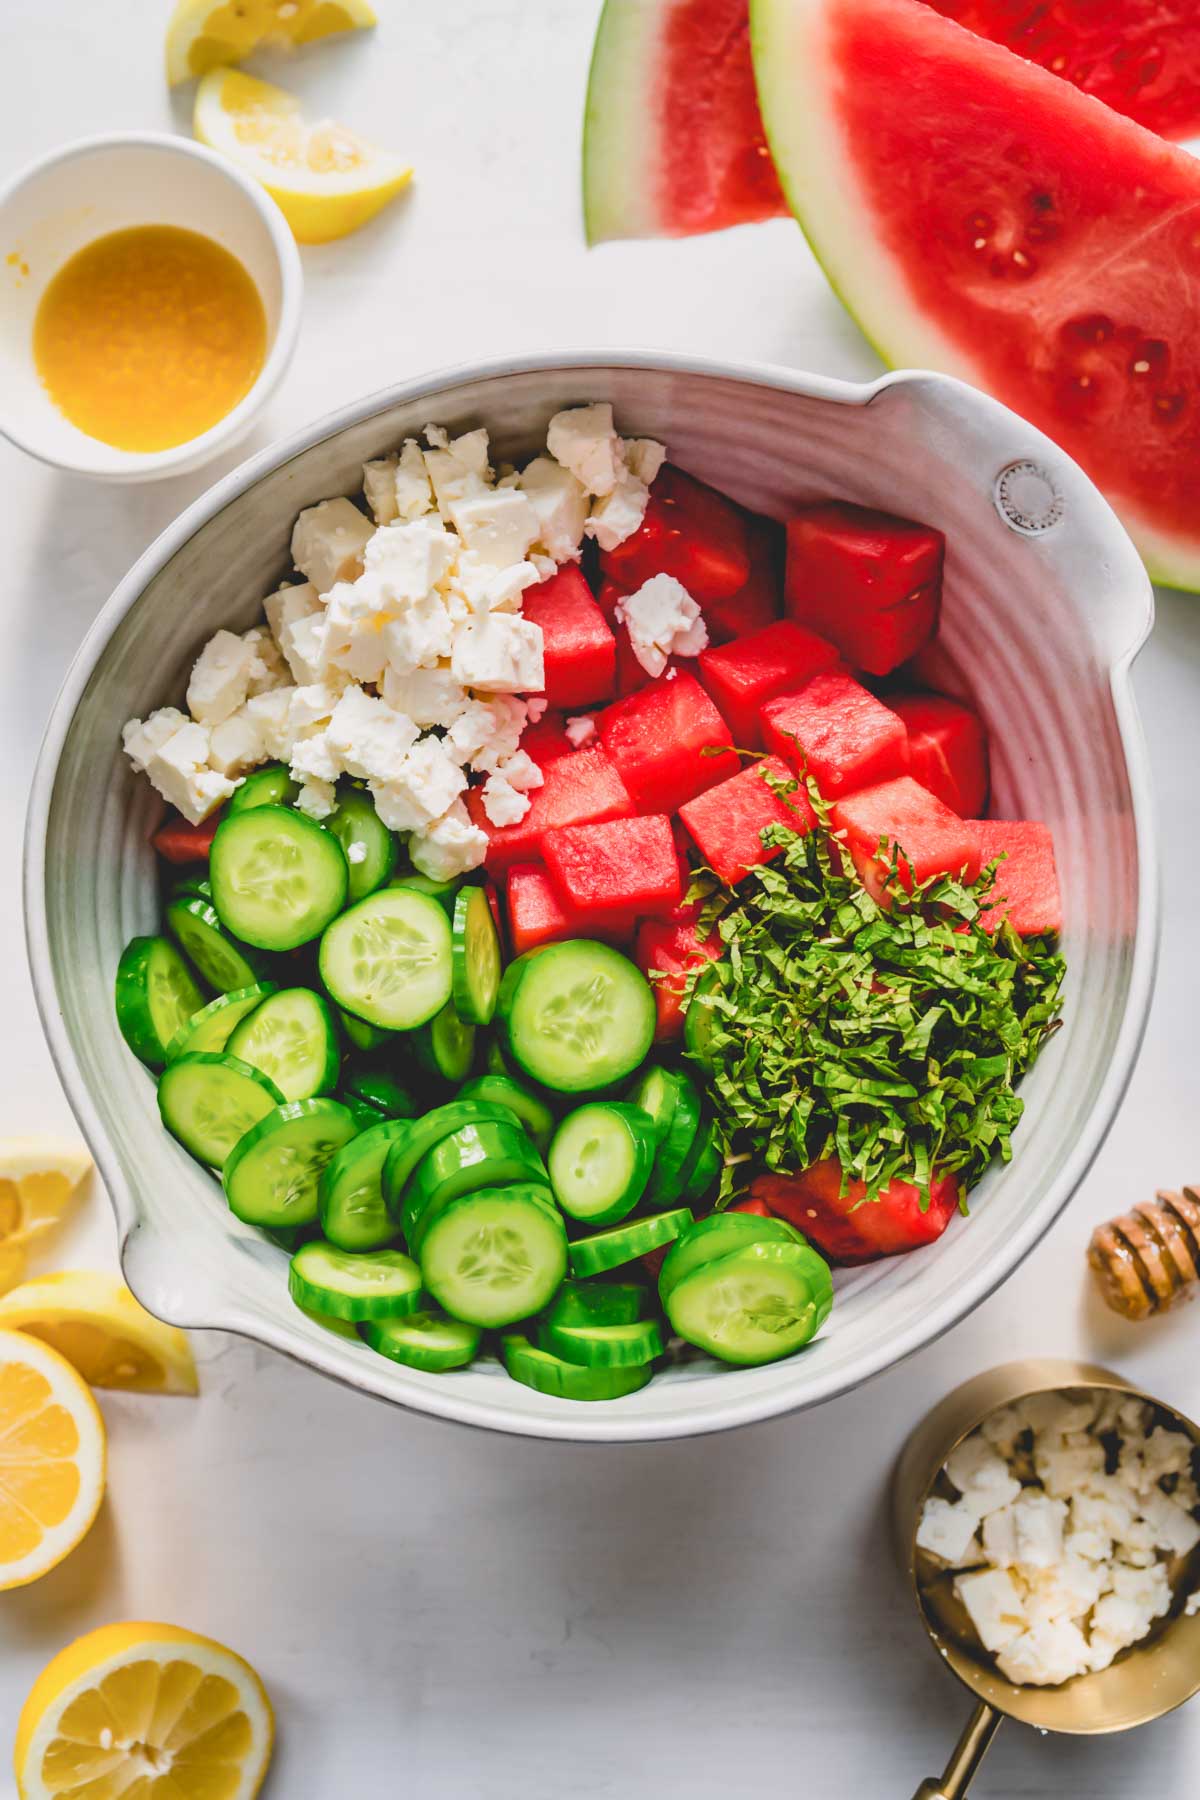 Salad ingredients in a large bowl.